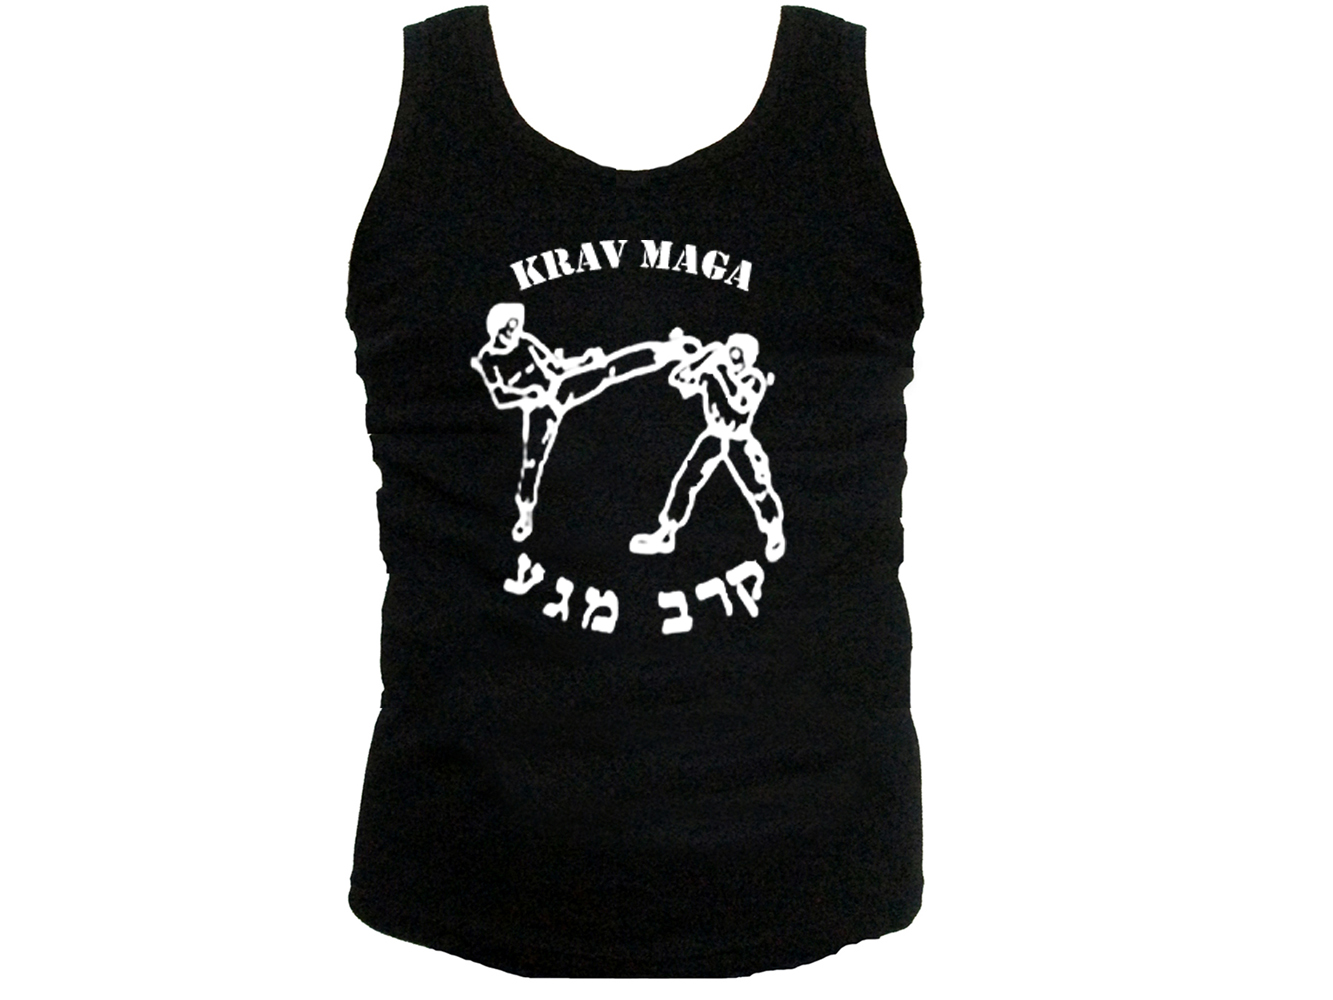 Krav Maga (Close Combat, Martial Arts) English/Hebrew gym tank top